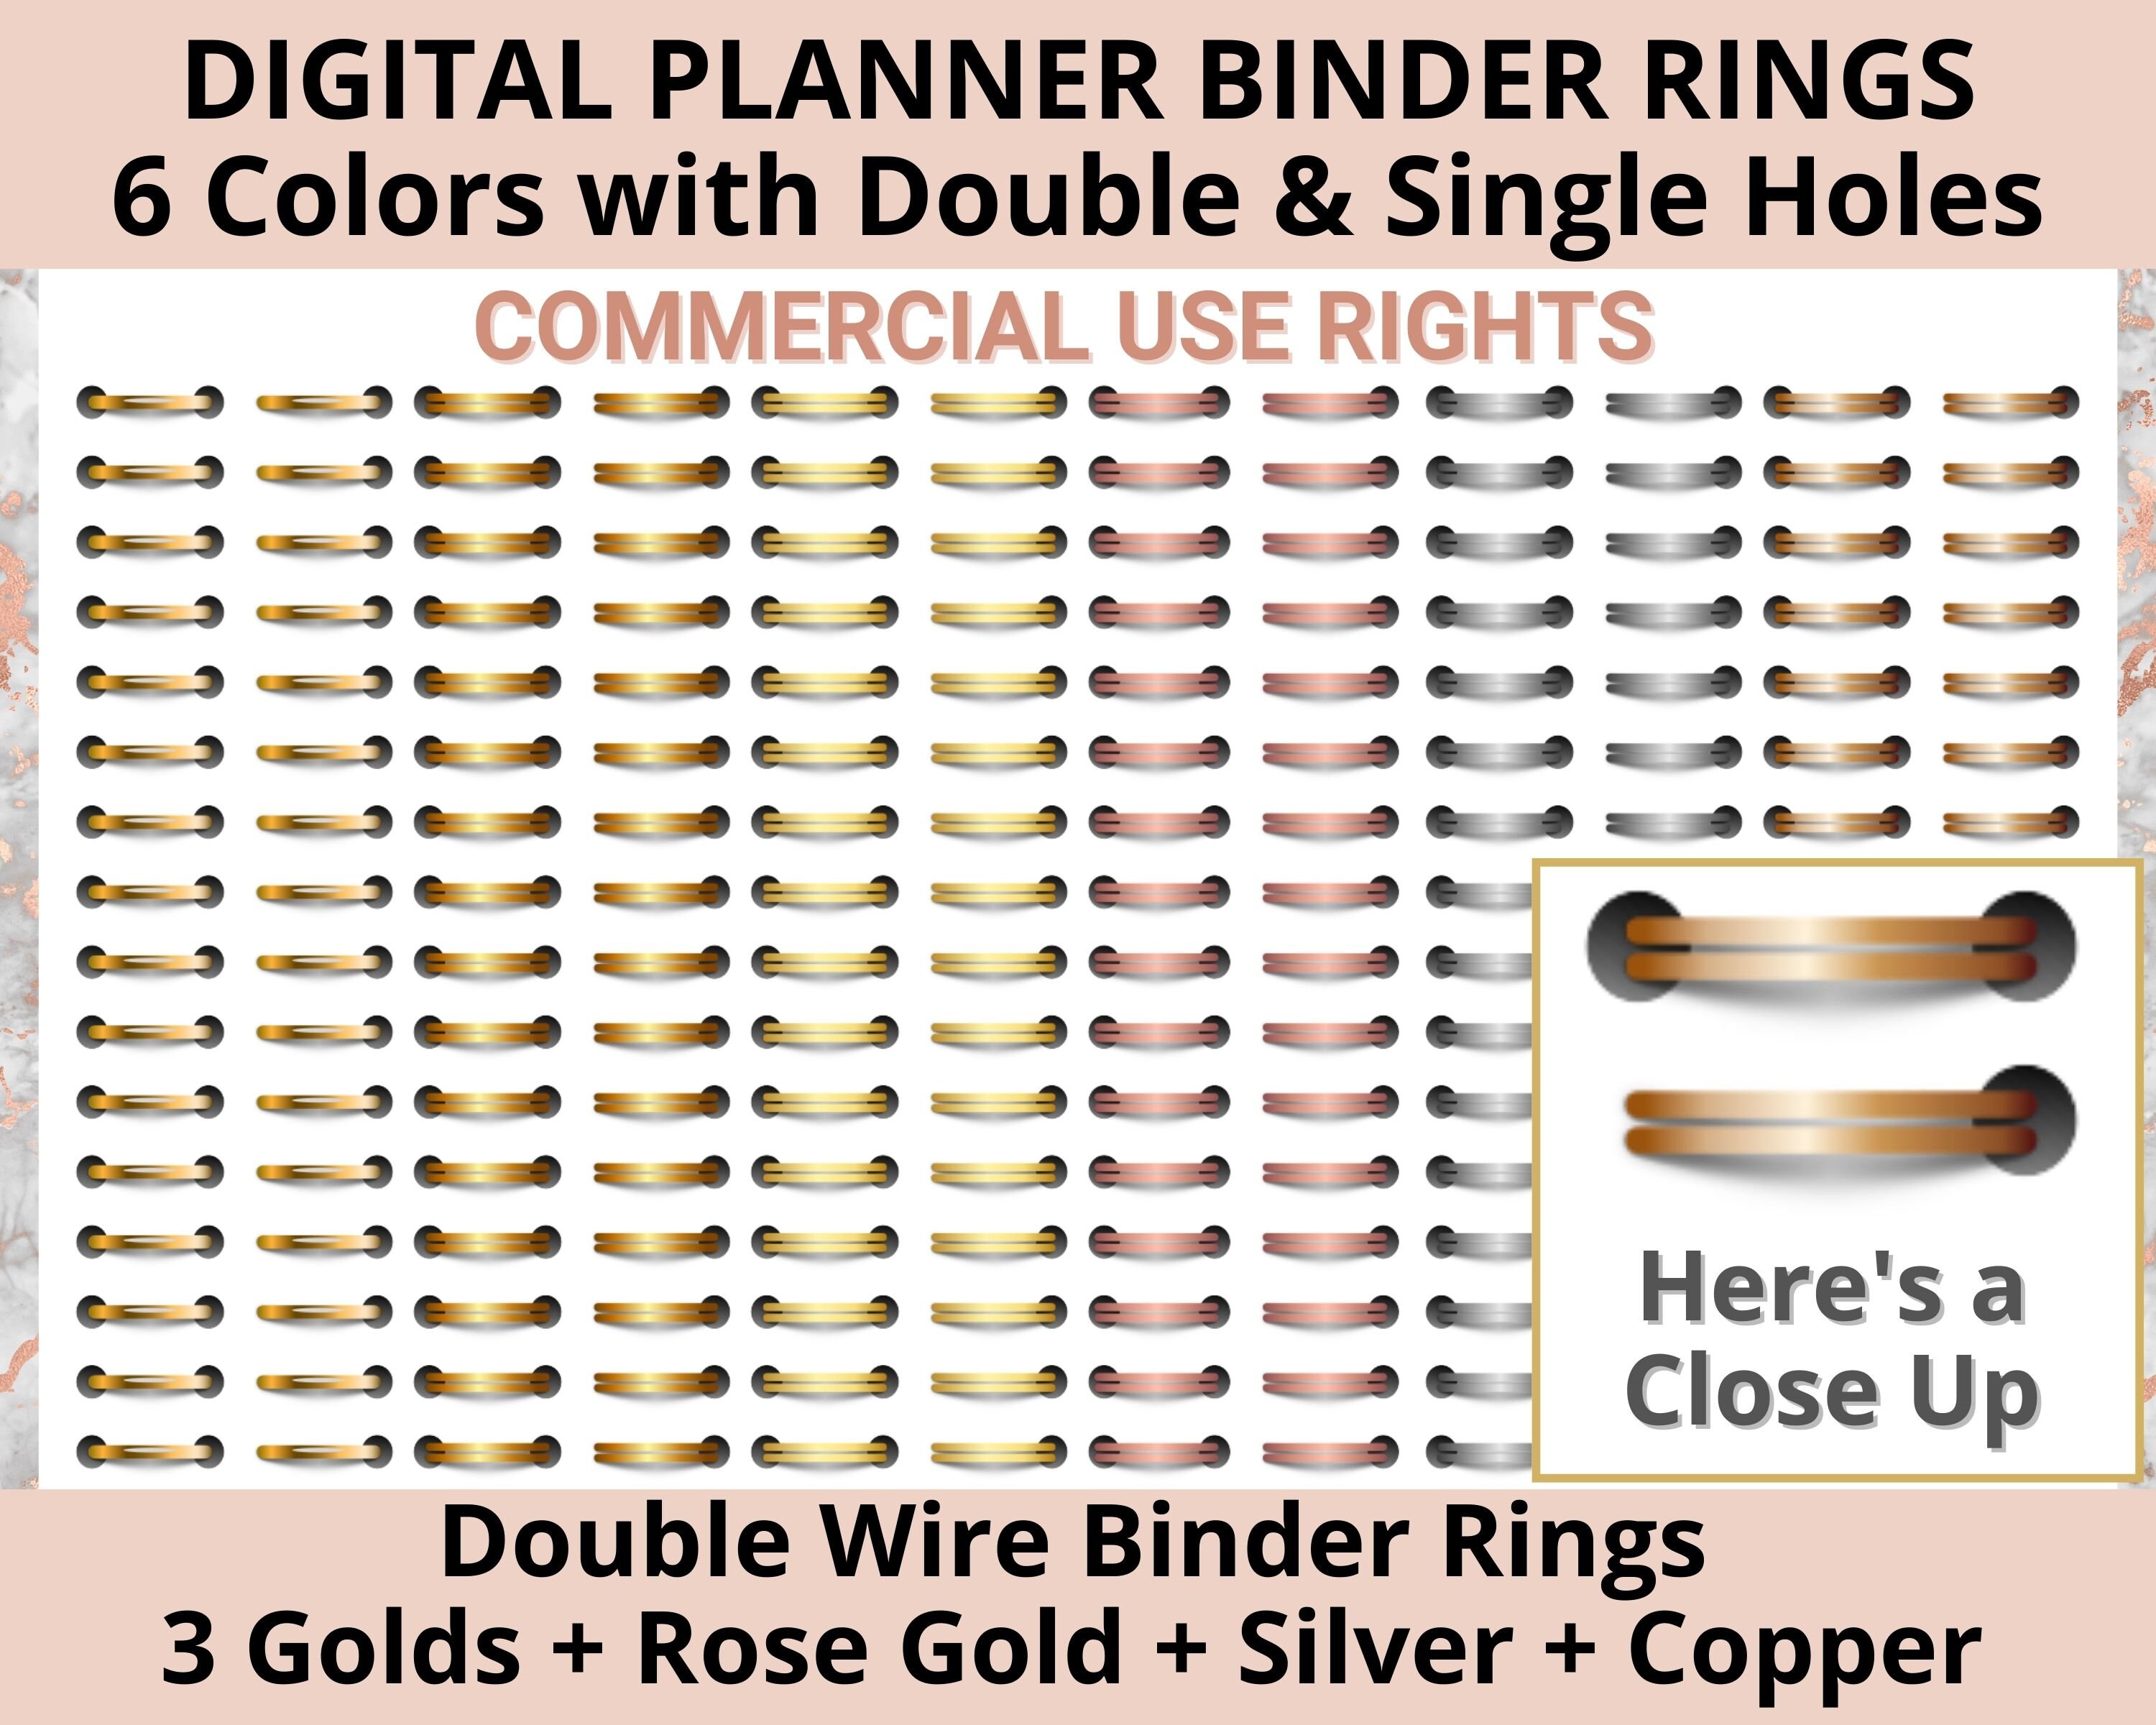 Digital Planner Binder Rings Metallics 4 Colors Silver Gold, Rose